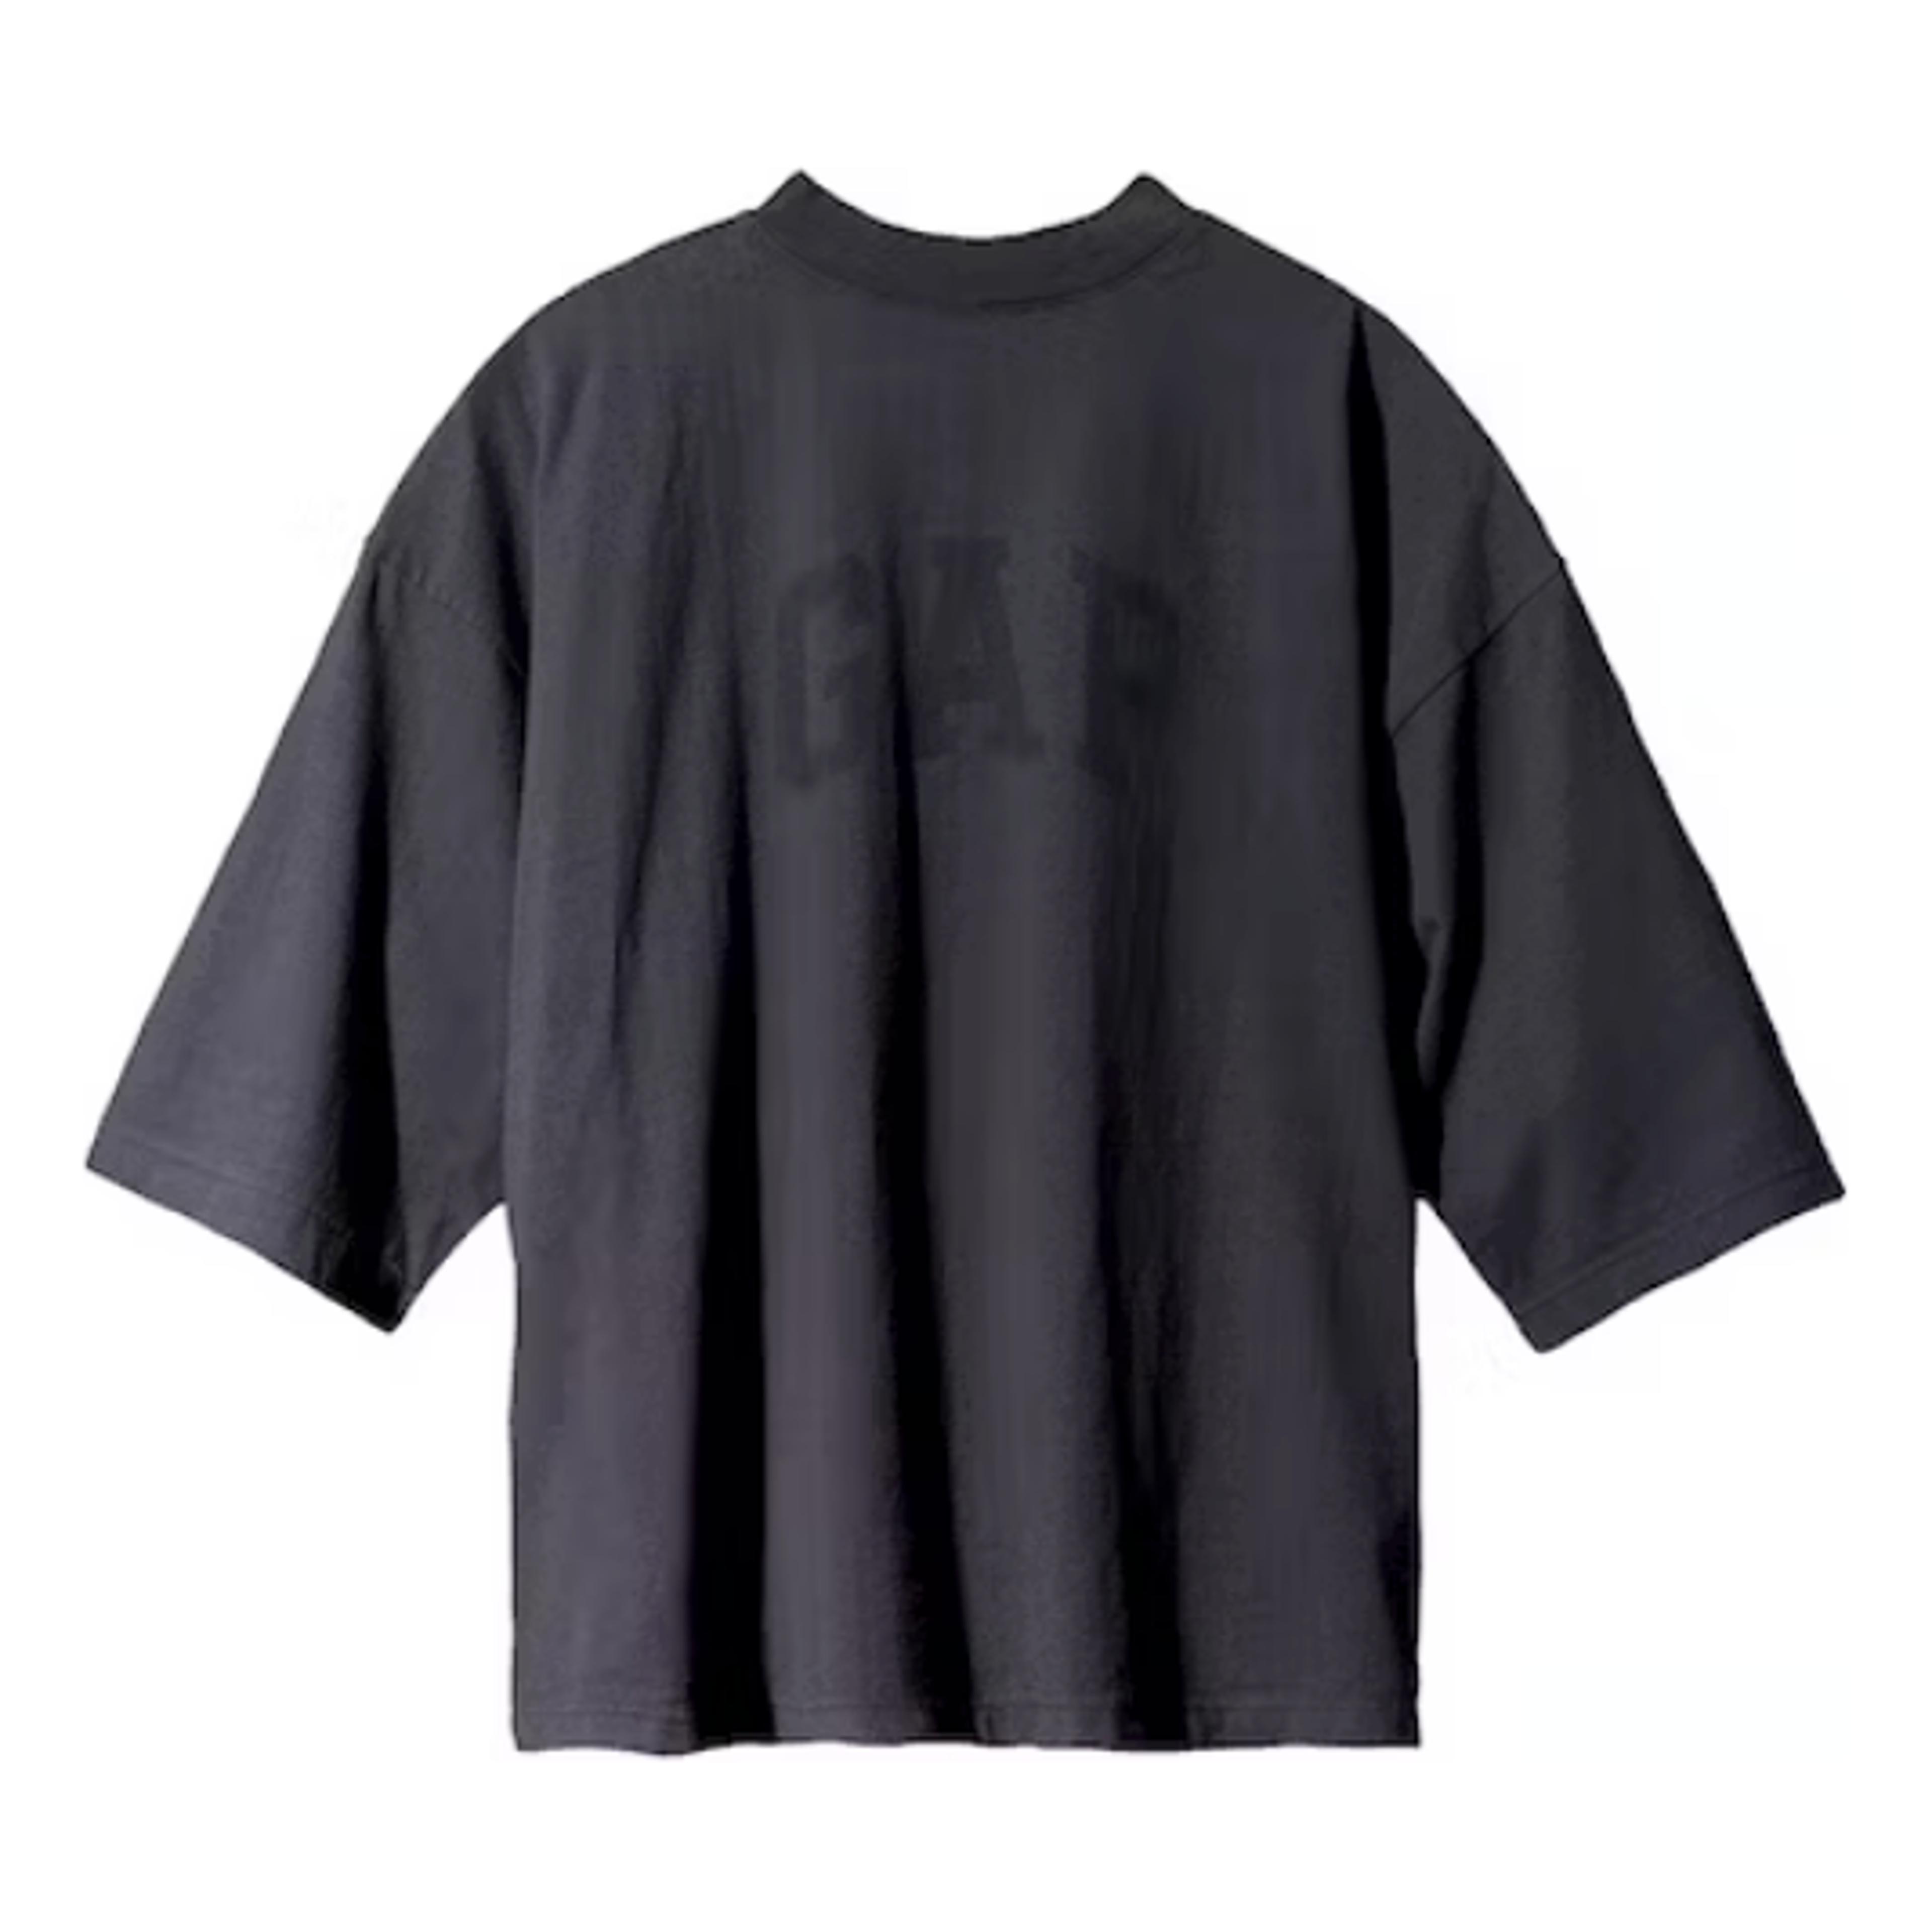 Yeezy Gap Engineered by Balenciaga Dove 3/4 Sleeve T-shirt Washe